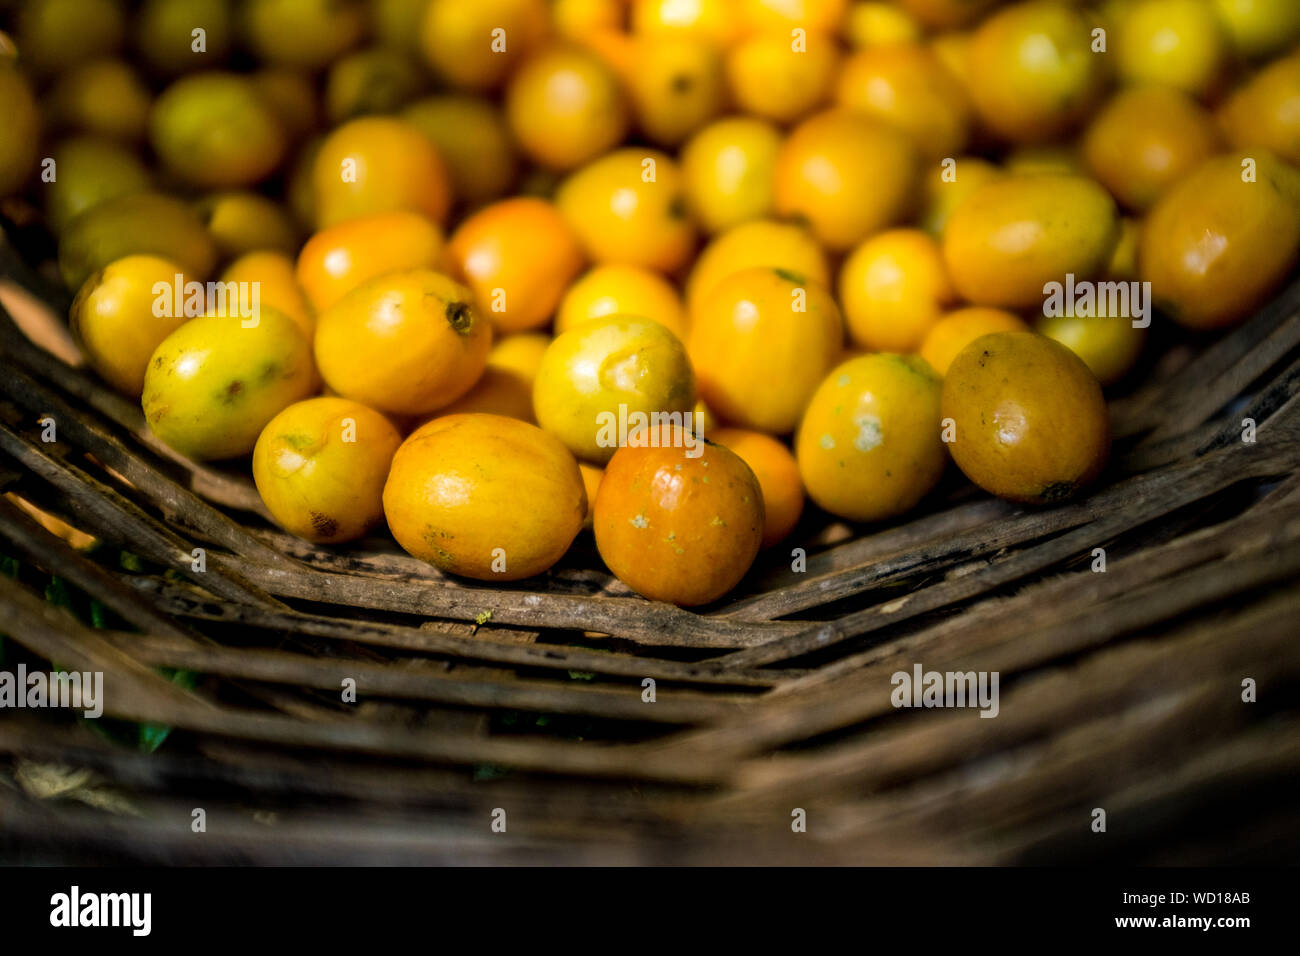 Yellow Organic Coffee Fruits Harvest in Wicker Basket Coroico, Bolivia Stock Photo